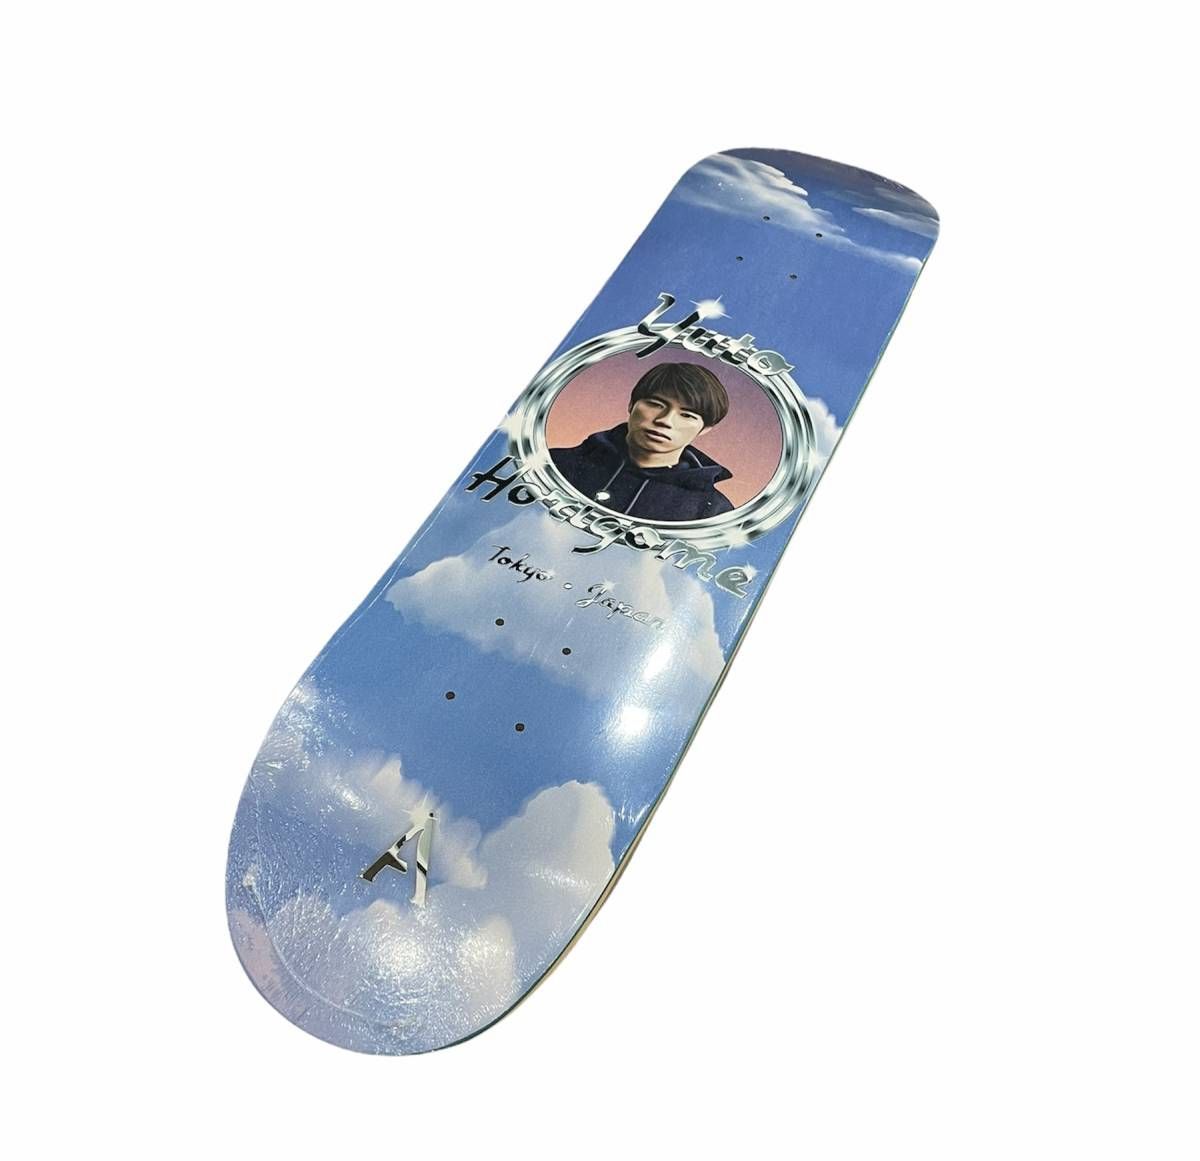 April skateboards 堀米雄斗 YUTO HORIGOME 8.0 - スケートボード